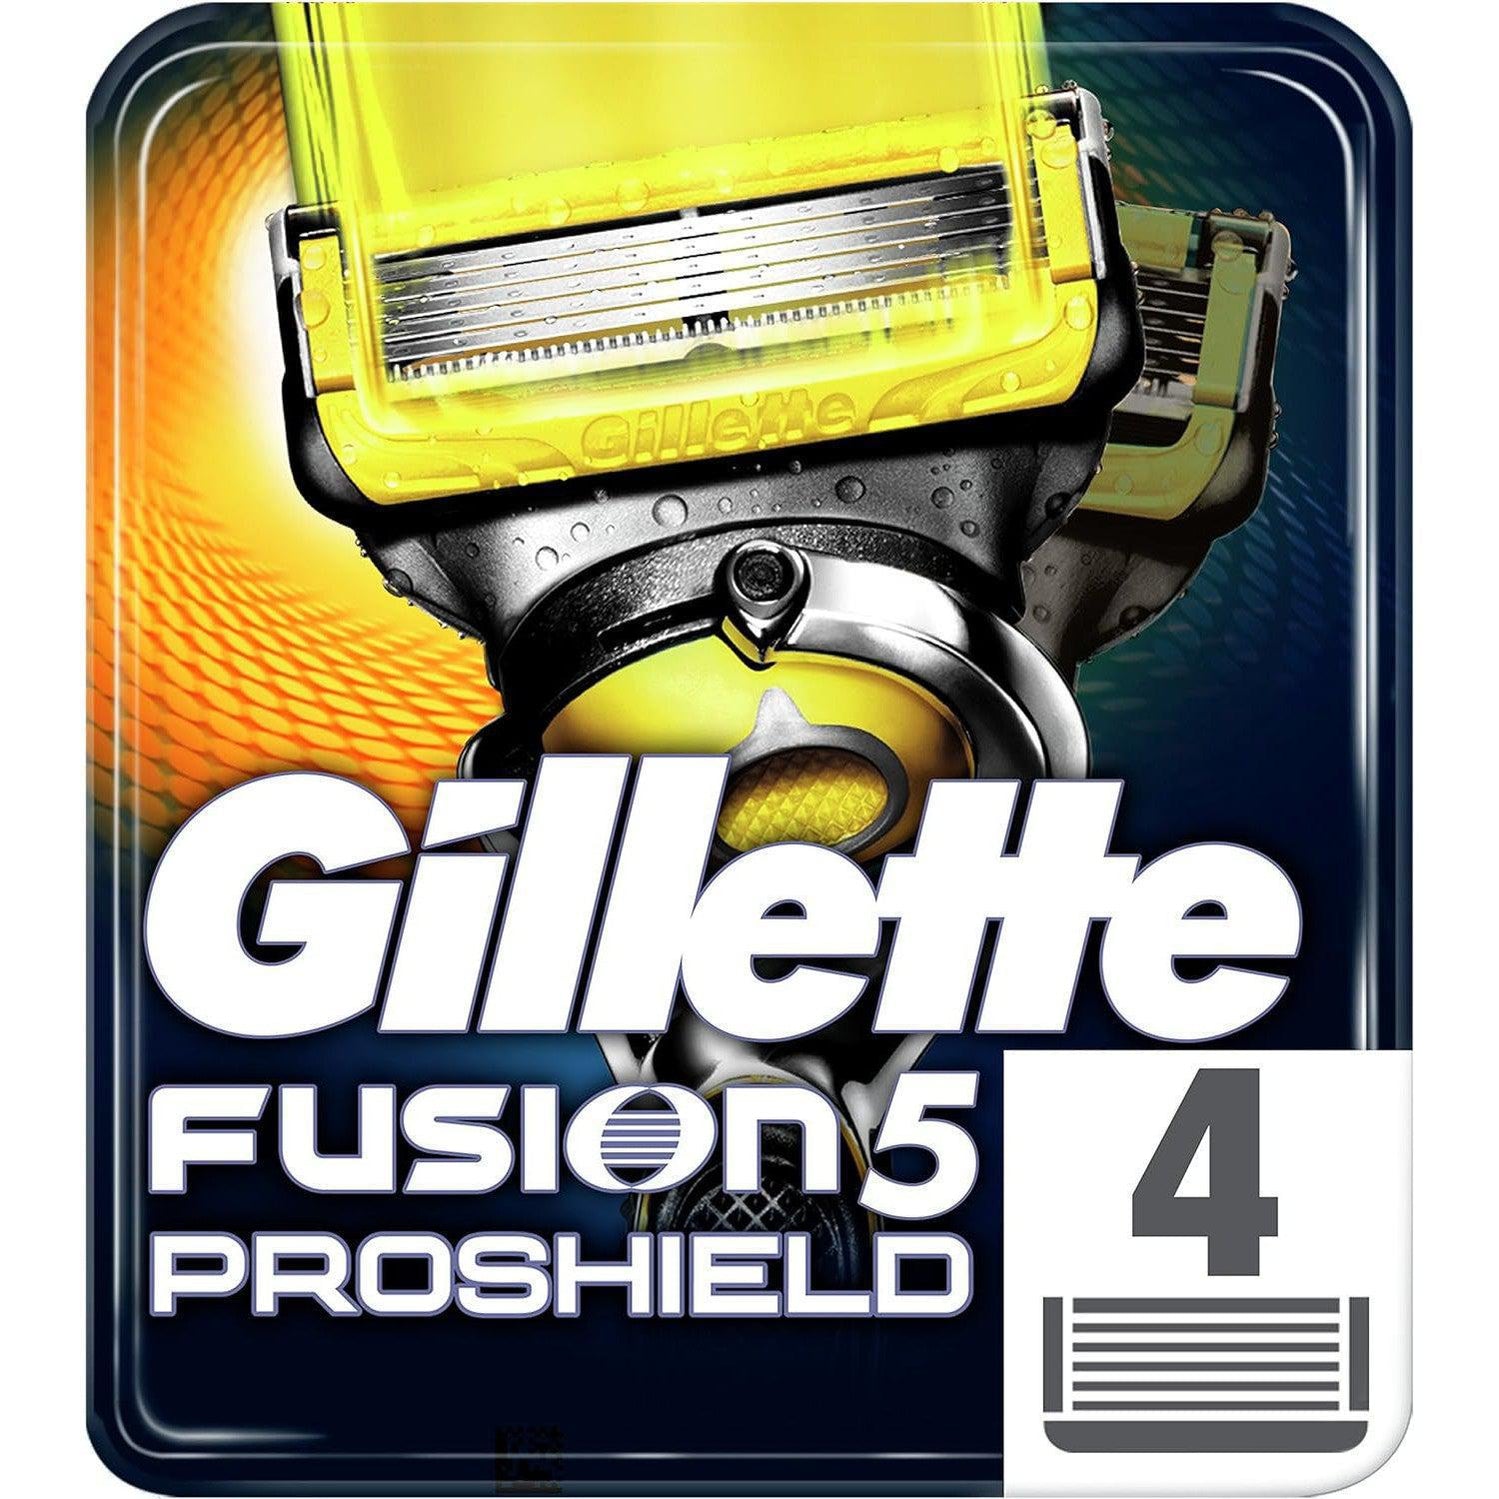 Gillette Fusion5 ProShield Razor Blades - 4 Pack